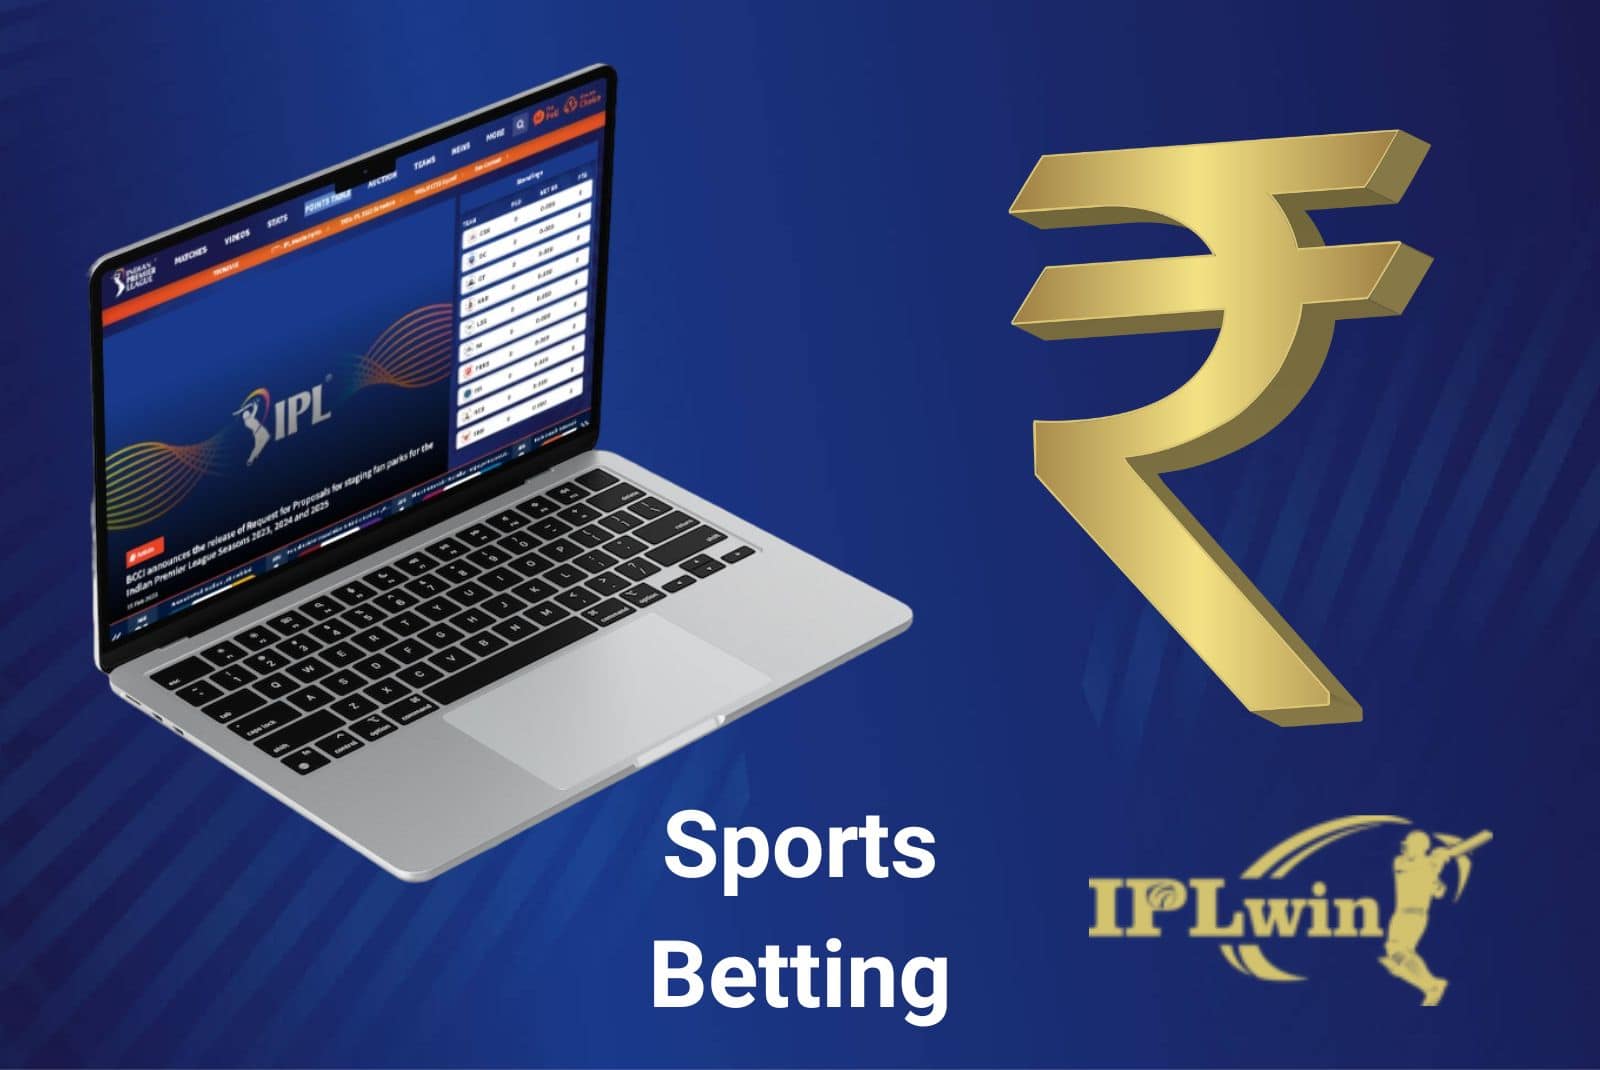 IPLwin India sports betting site instruction